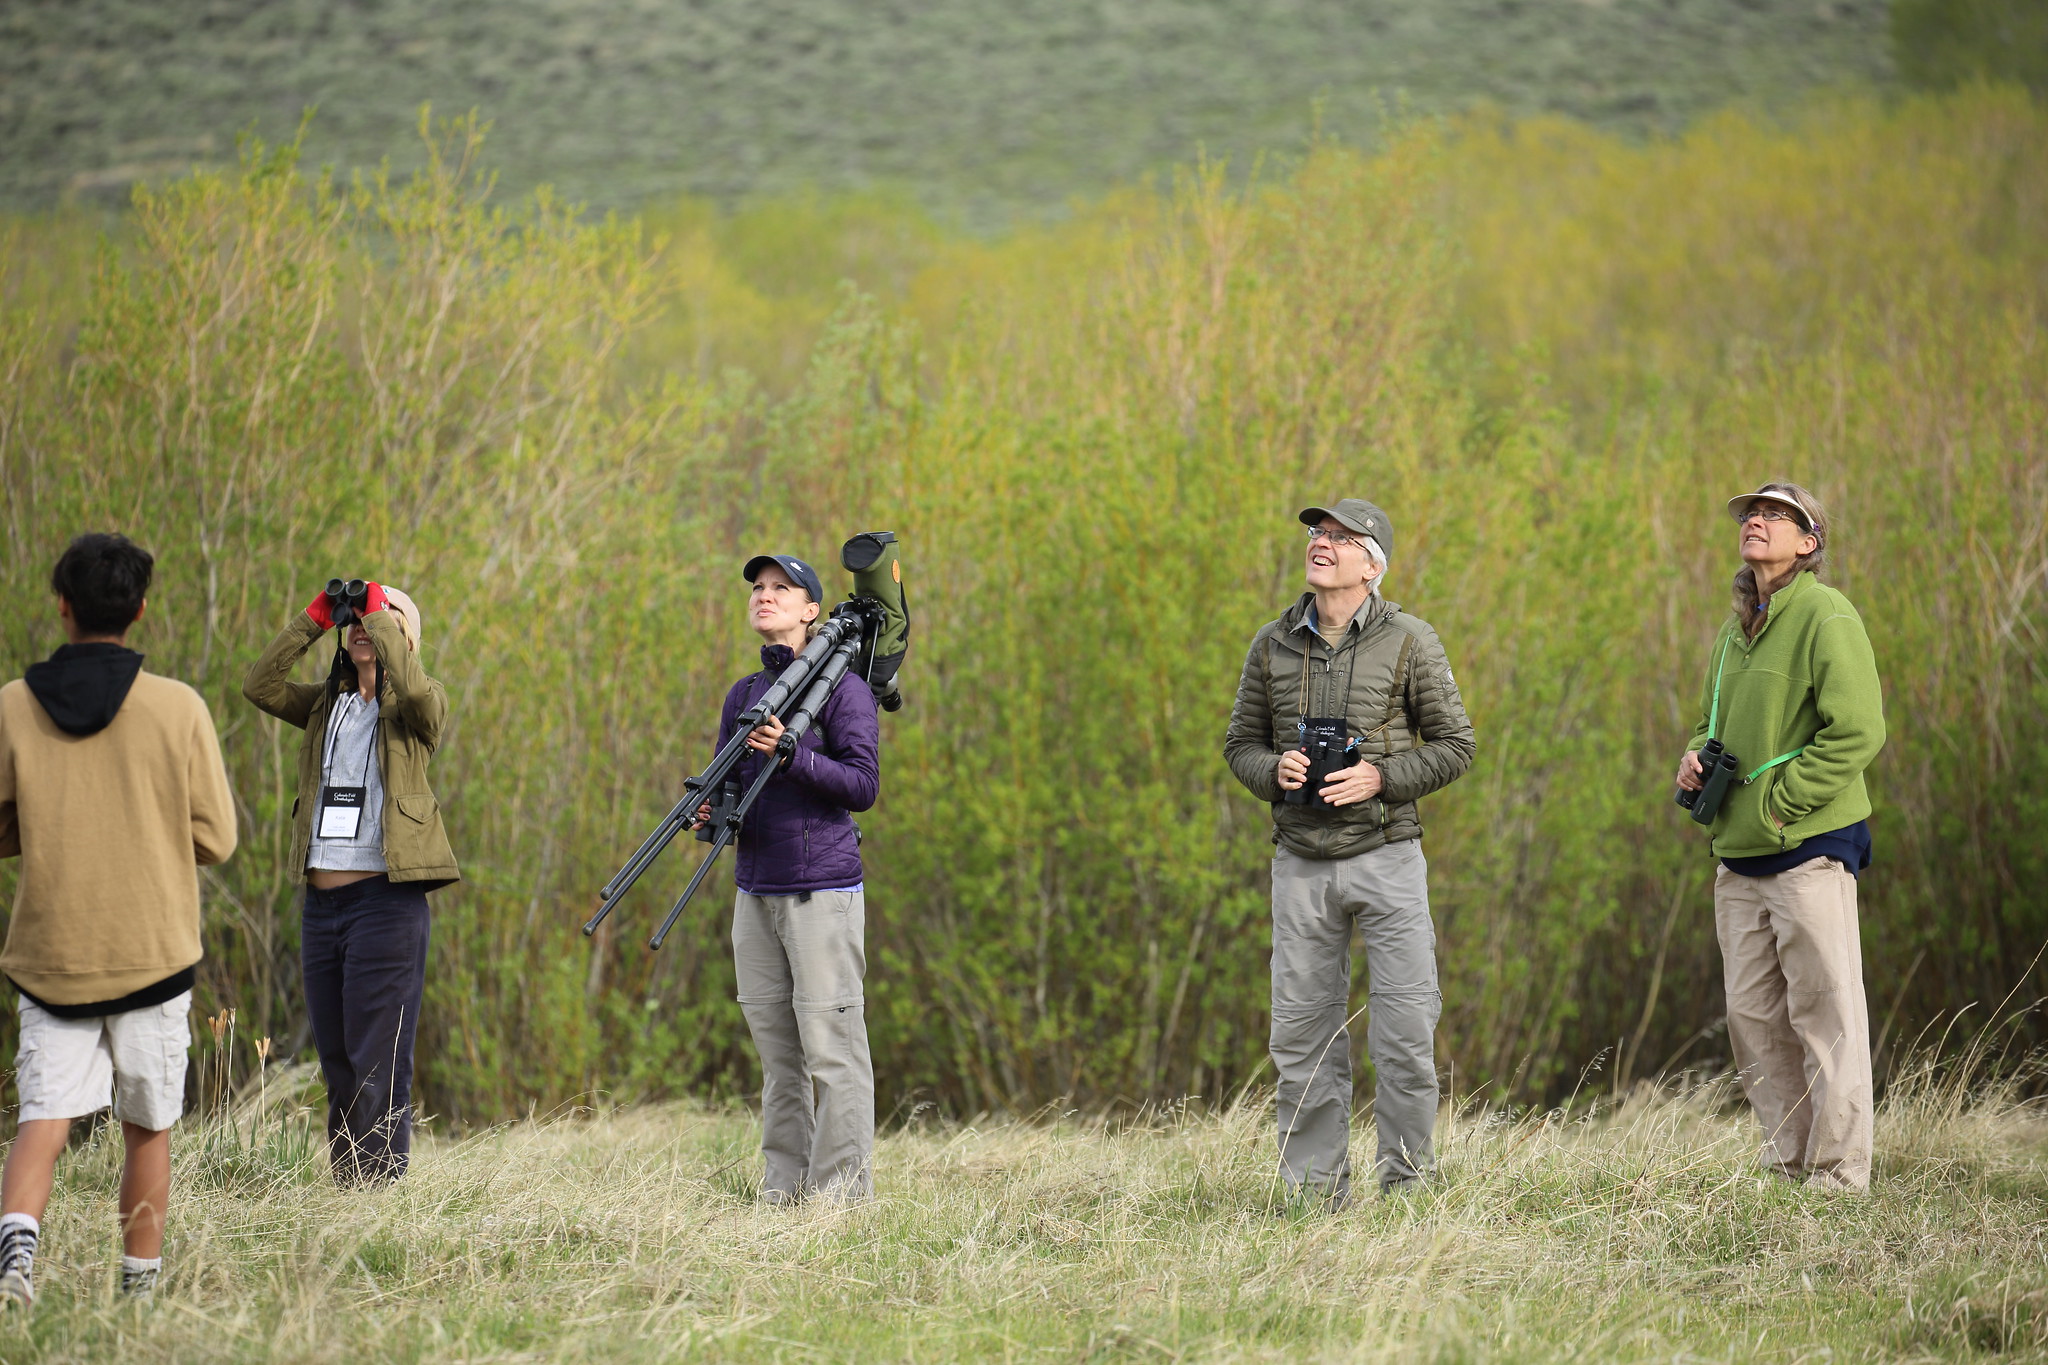 Group of five people standing in field, birding.